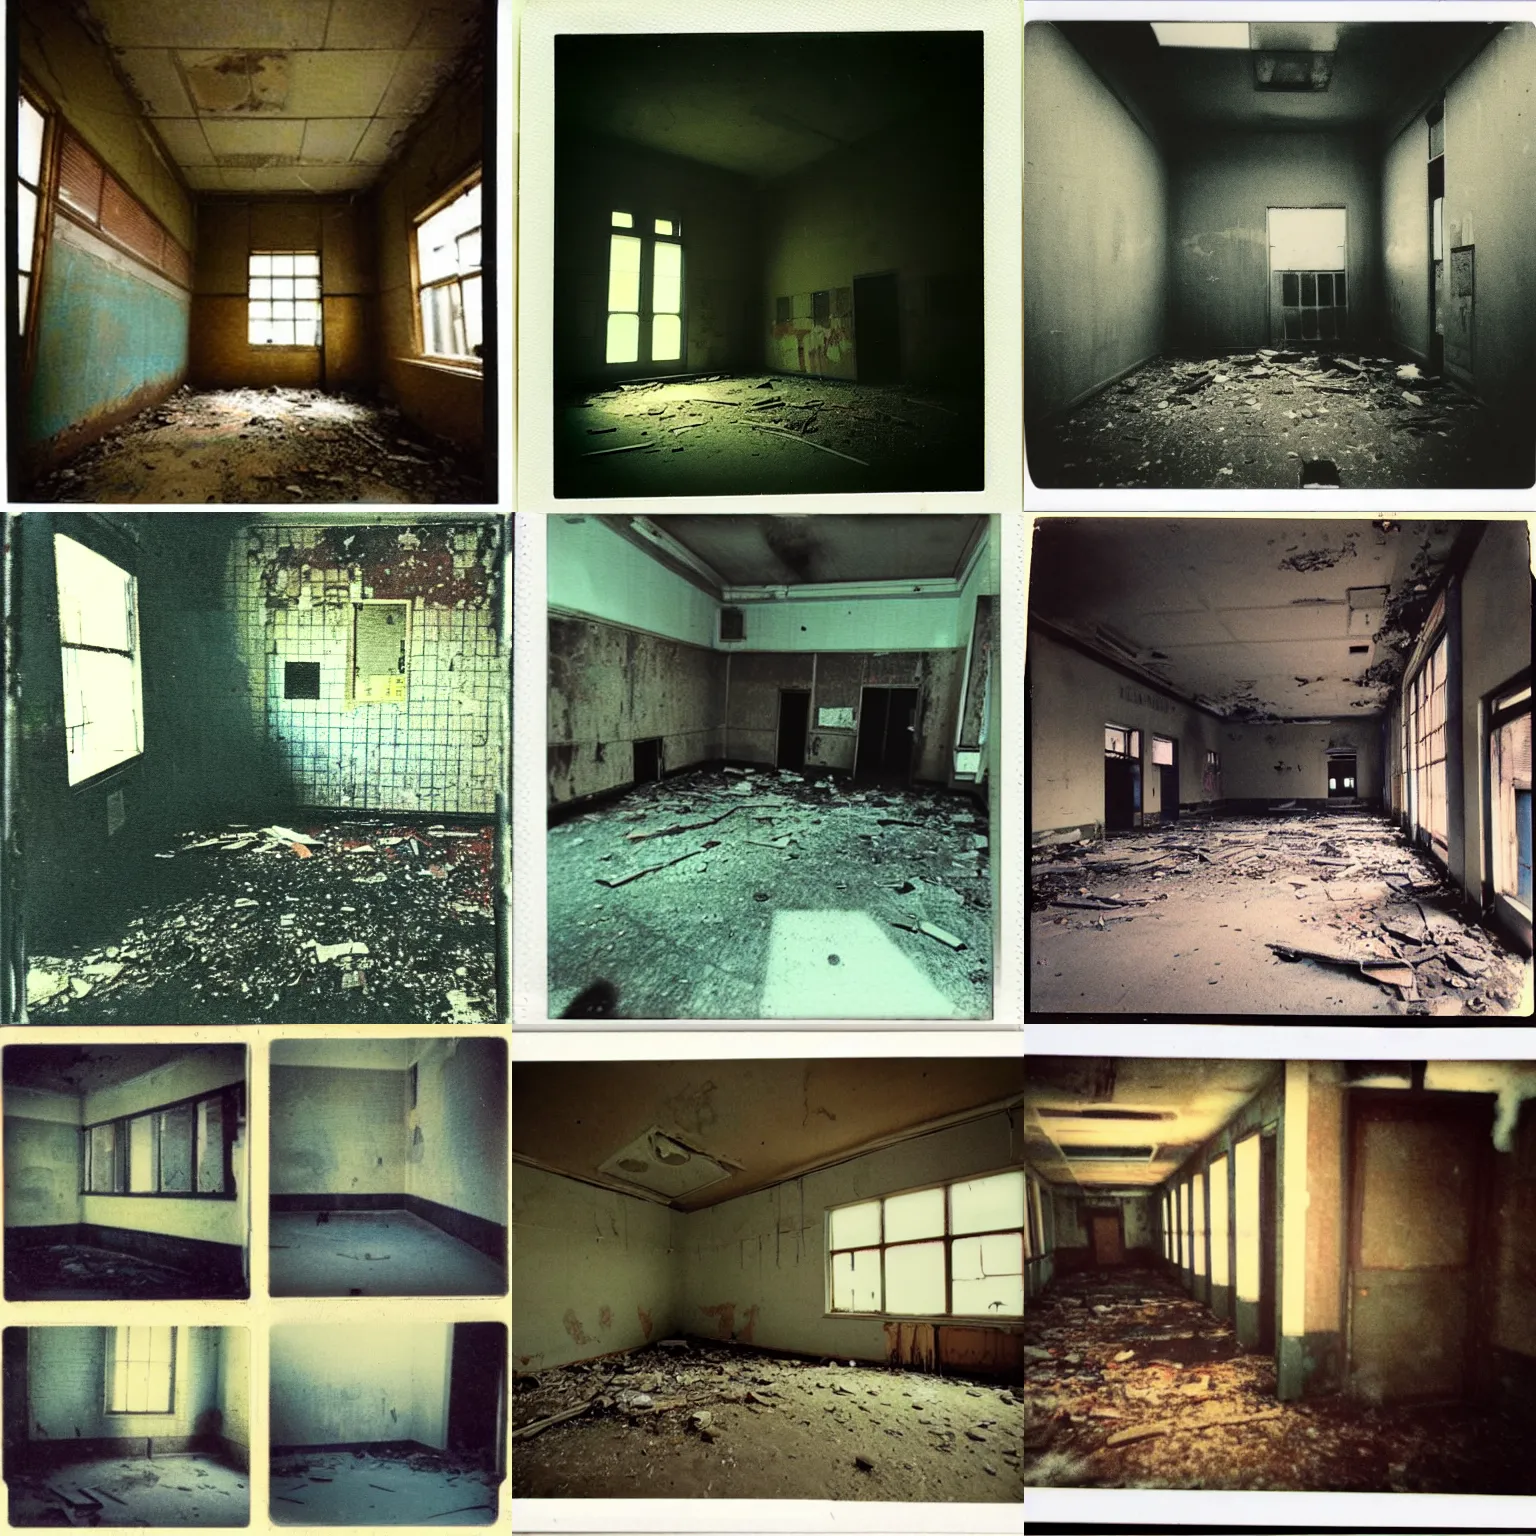 Prompt: polaroid of the interior of an abandoned school sad, depressing, creepy, bad lighting